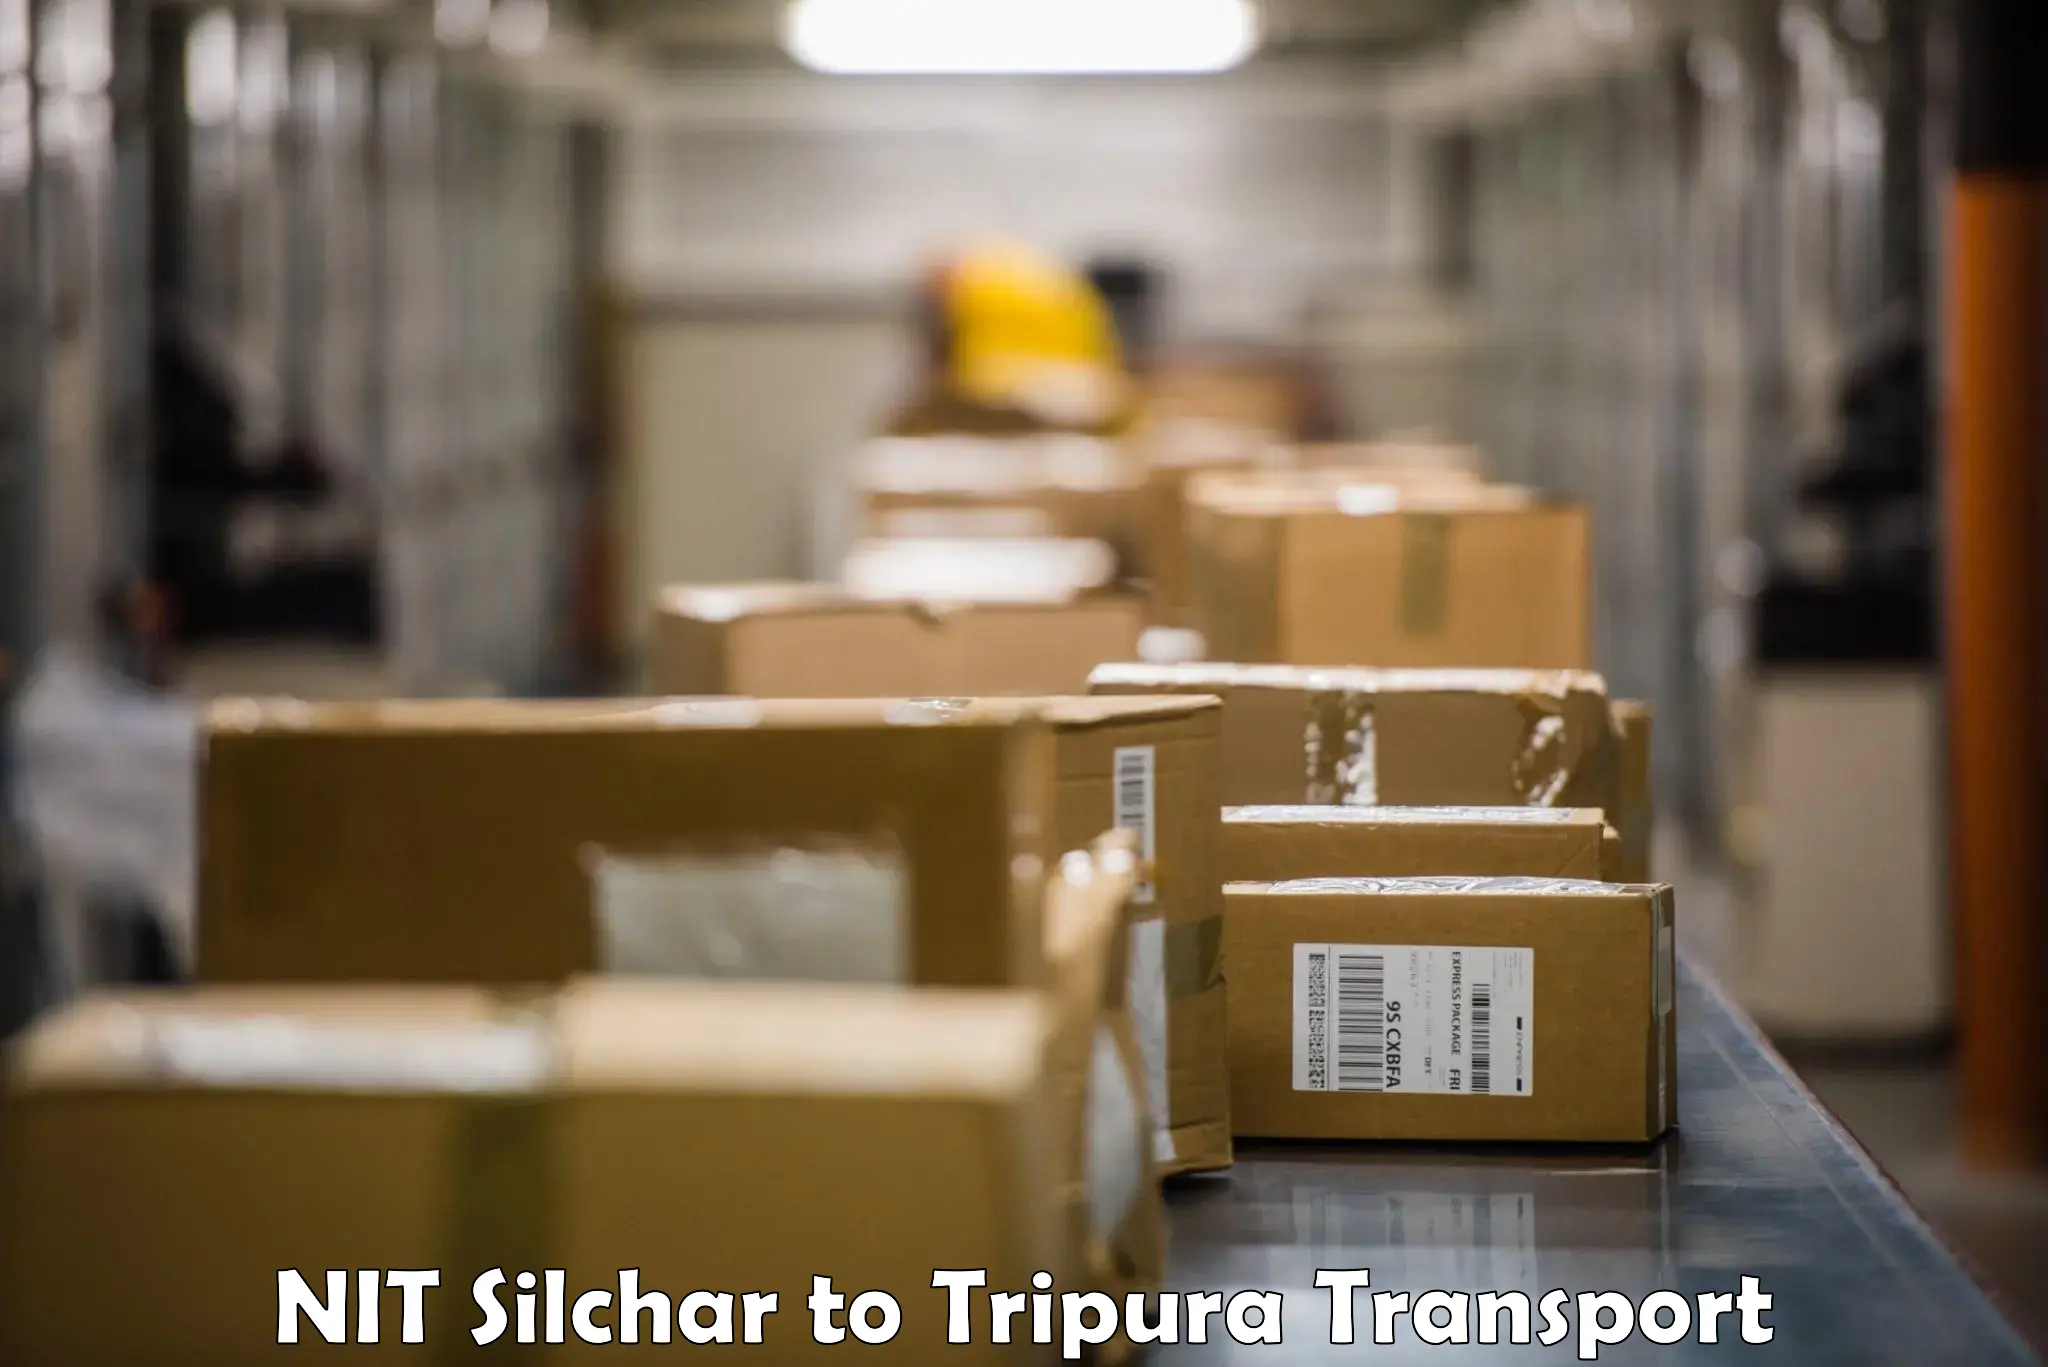 Online transport service NIT Silchar to Khowai